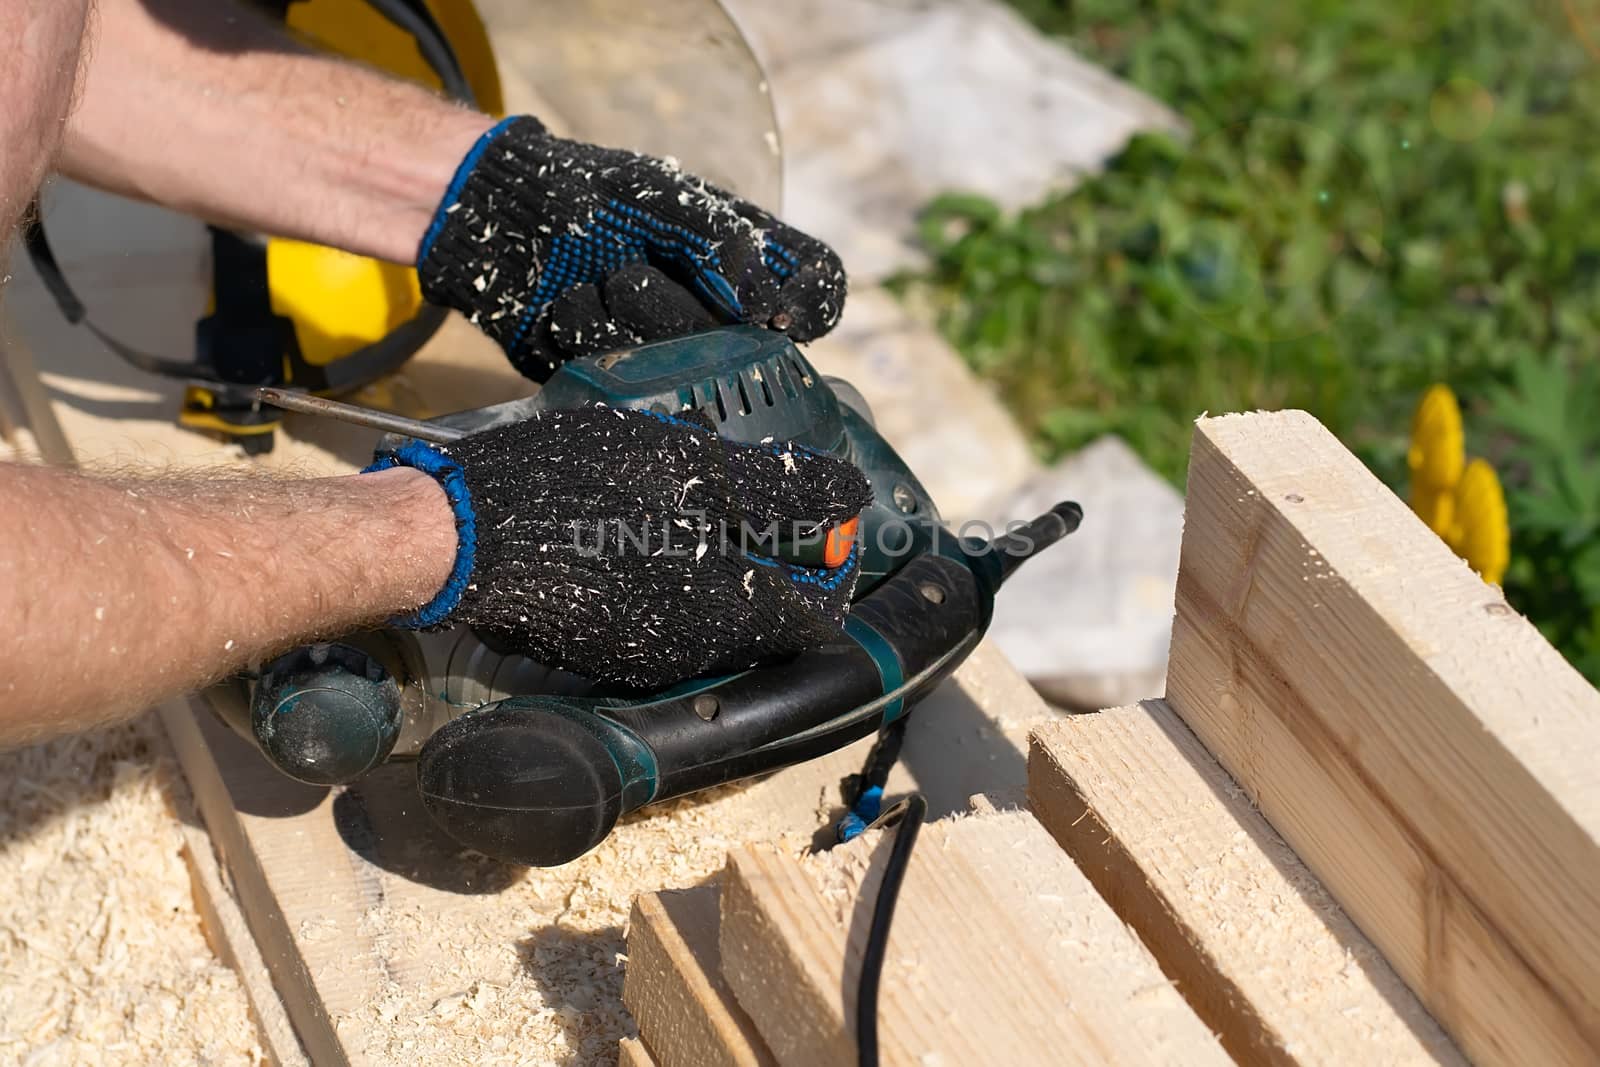 a master, craftsman, carpenter repairs an old broken electric tool for processing lumber